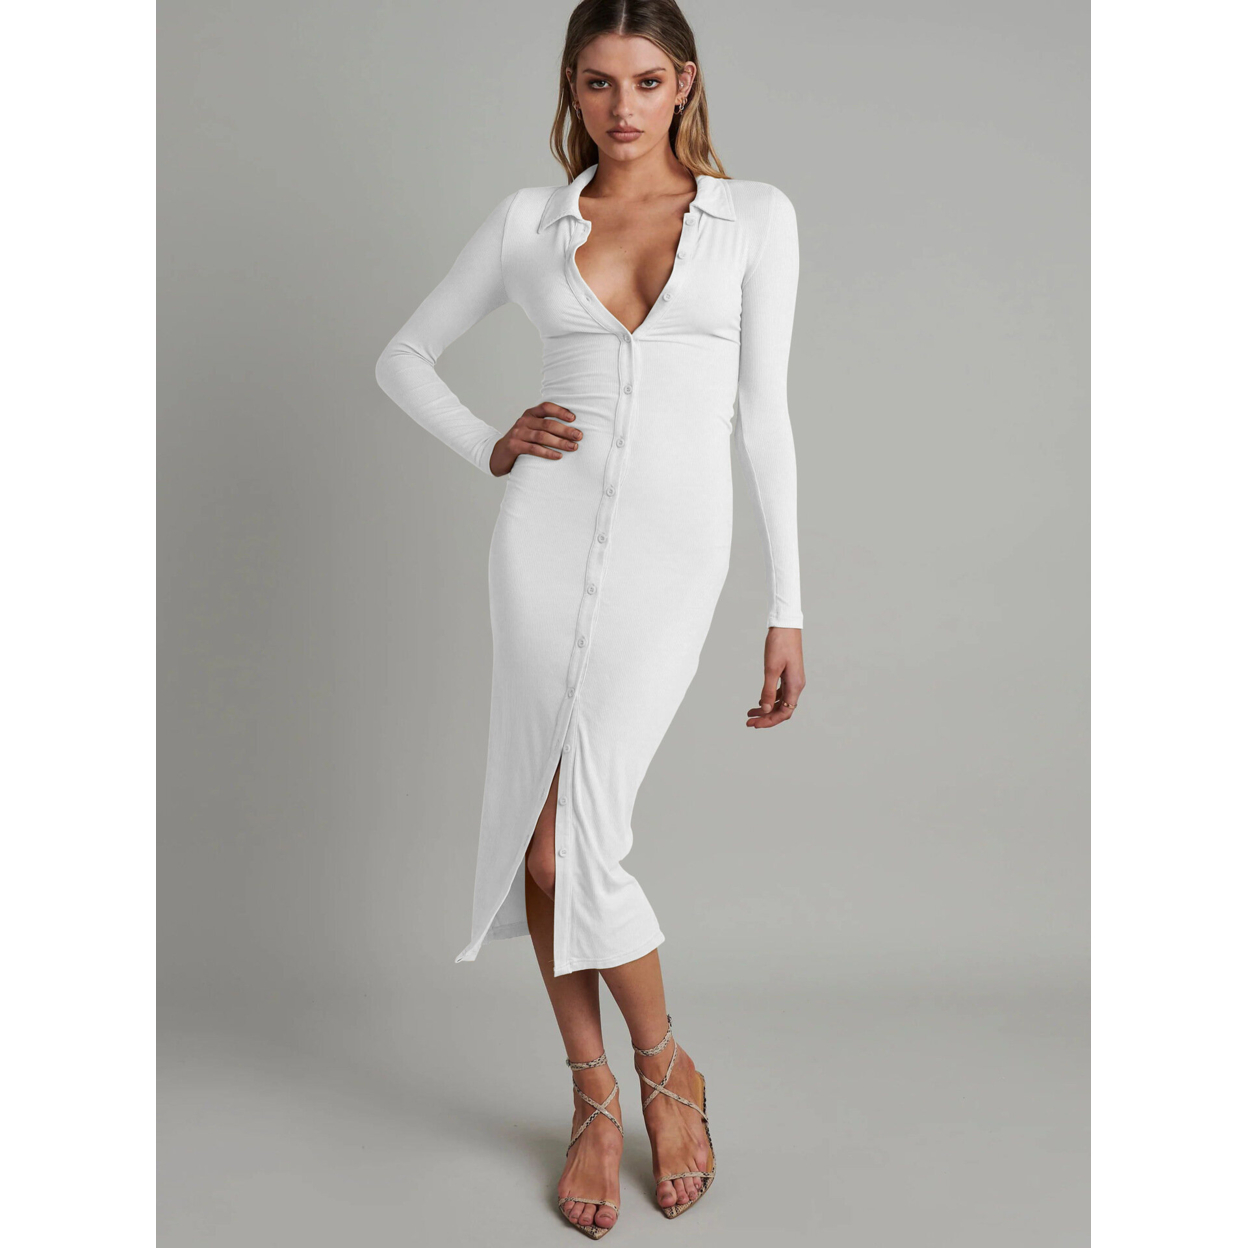 Sexy Fashion Cardigan Long Sleeve Shirt Skirt Women's Long Dress - White, S